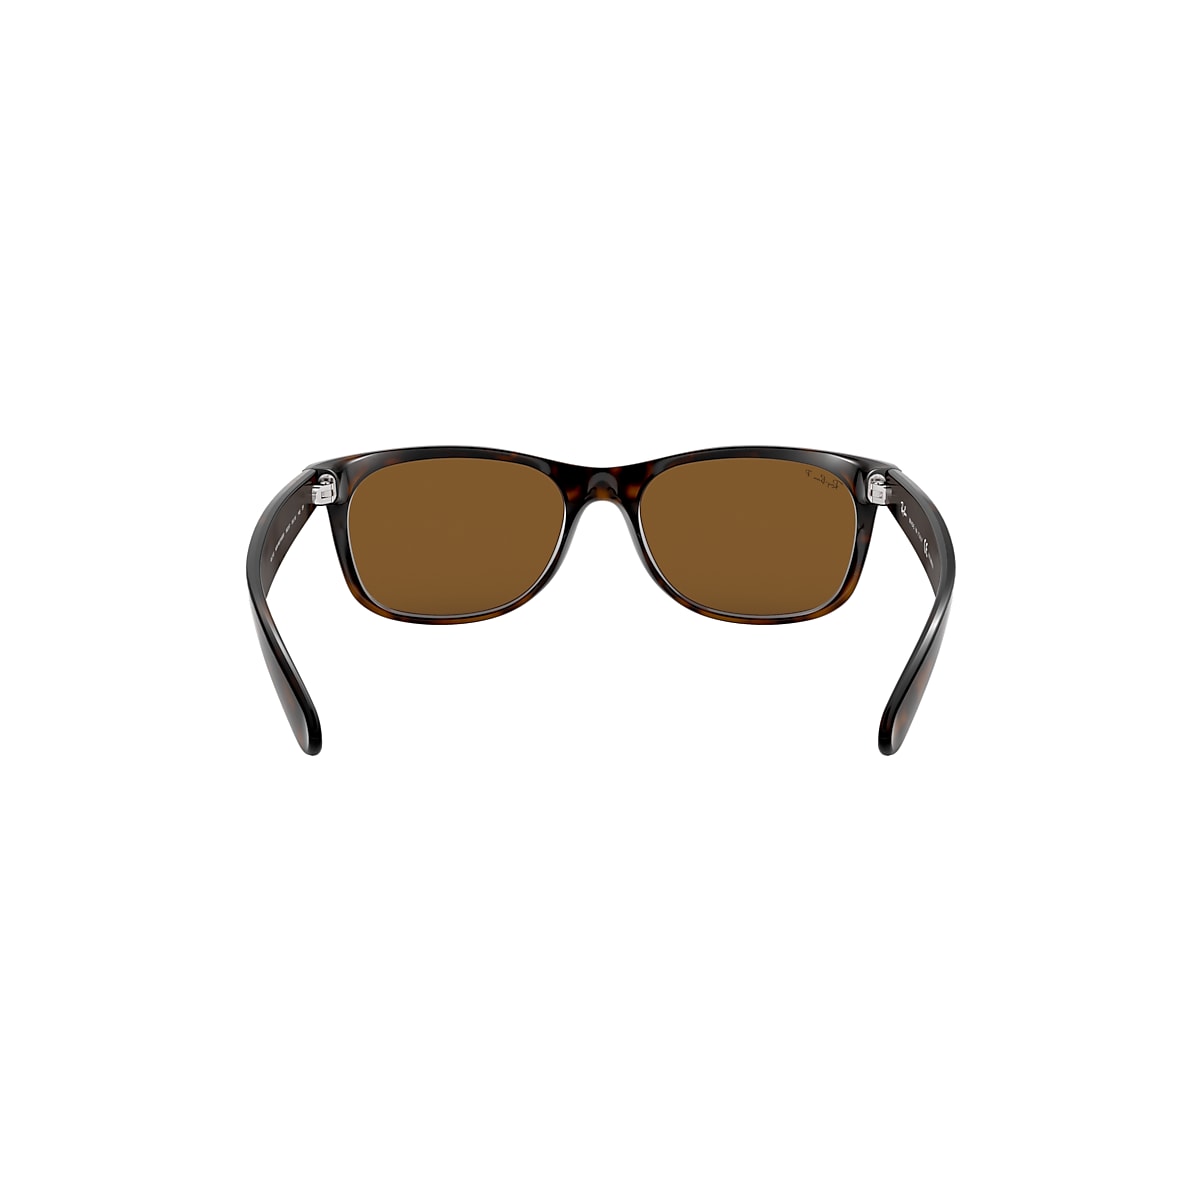 NEW WAYFARER CLASSIC Sunglasses in Tortoise and Grey